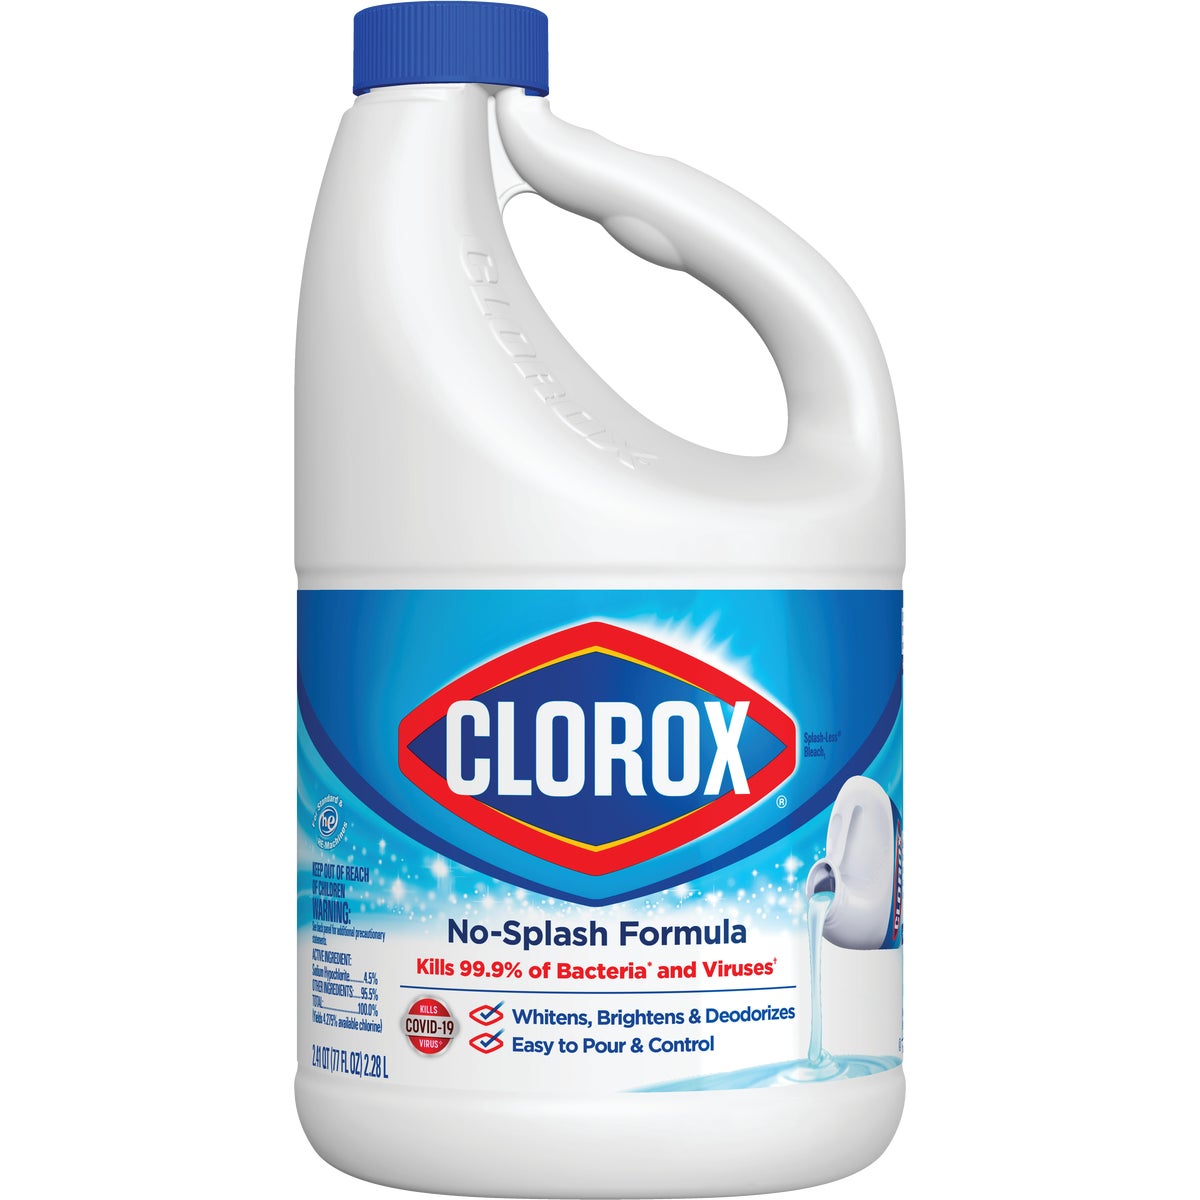 Clorox 77 Oz. Concentrated Splash-Less Liquid Bleach